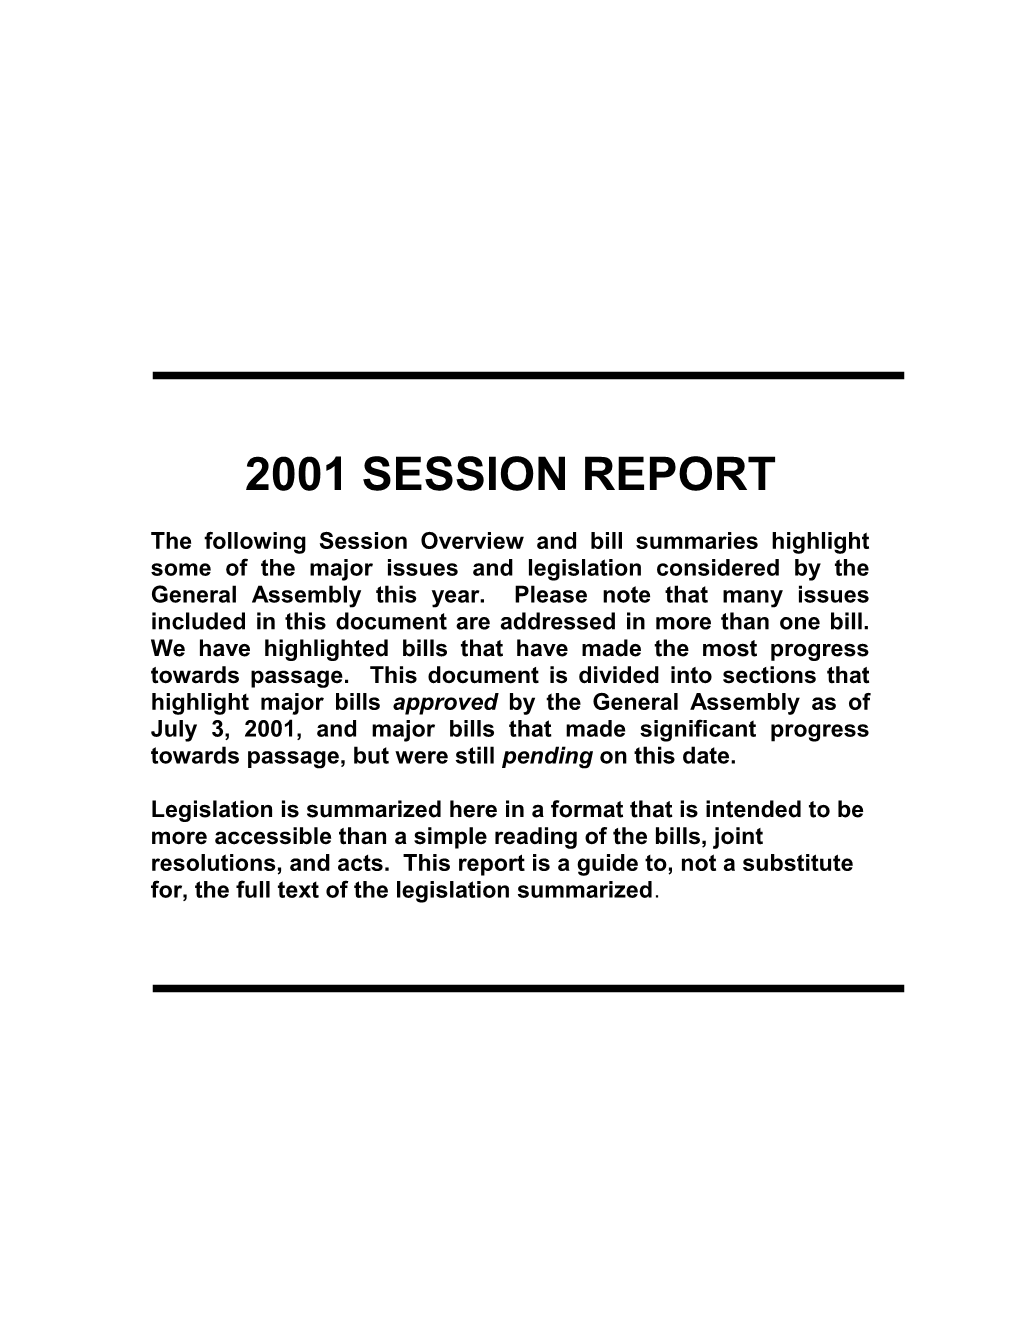 Legislative Update - 2001 Session Report - South Carolina Legislature Online